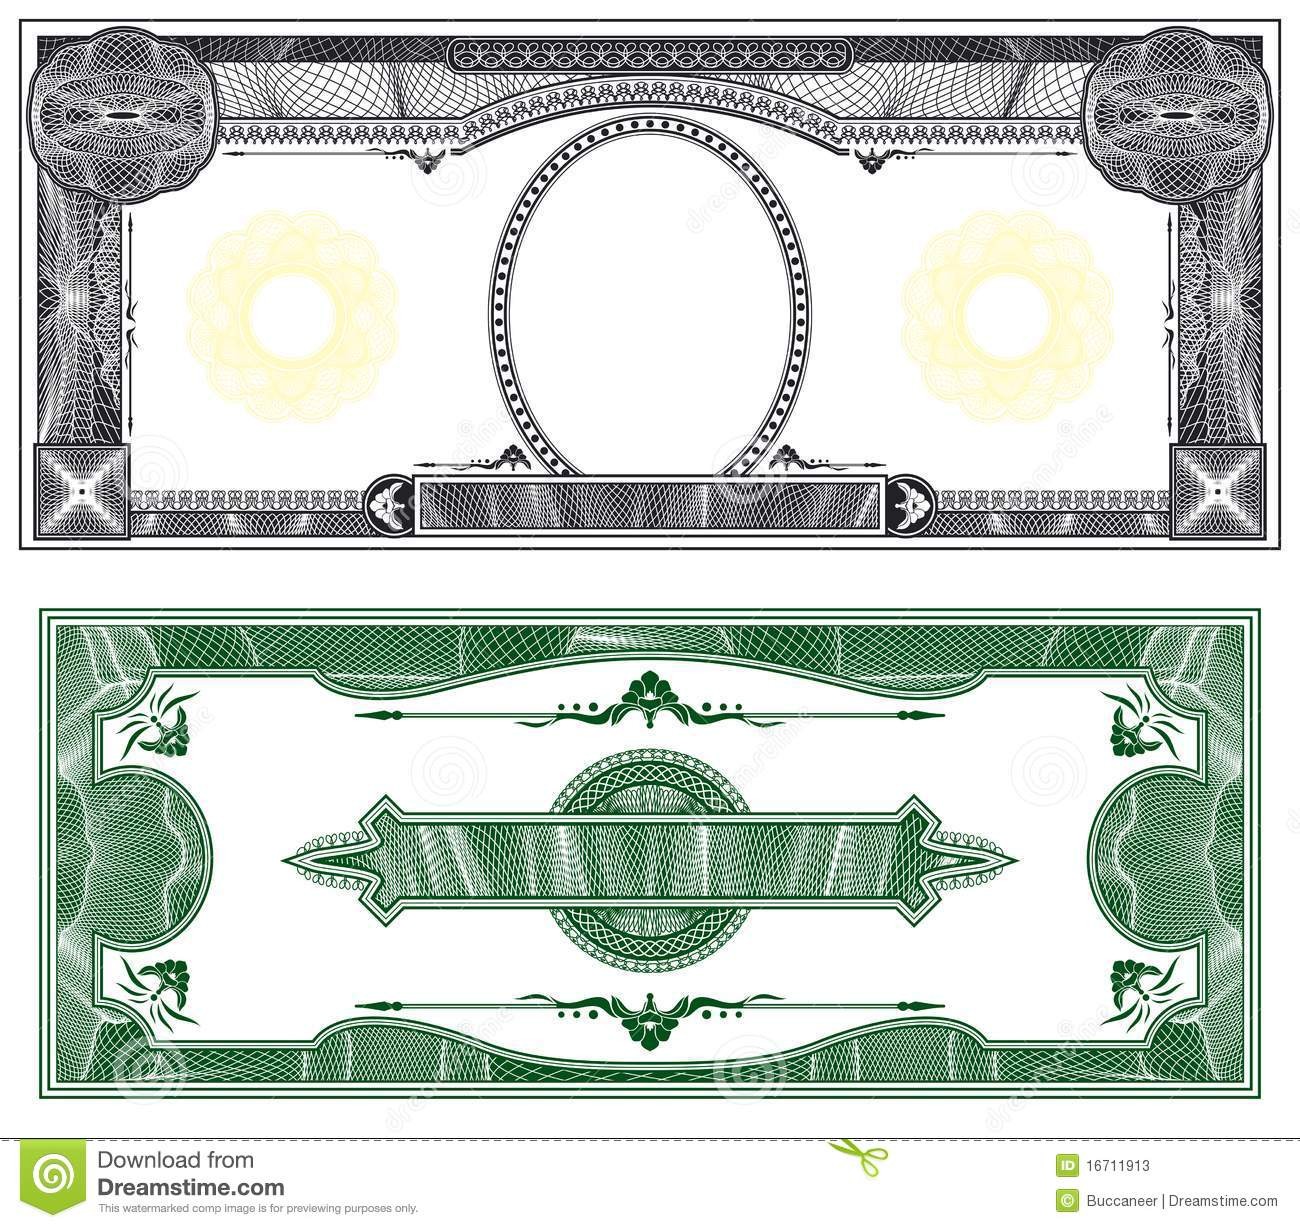 Fake Money Gift Certificate Template - carlynstudio.us